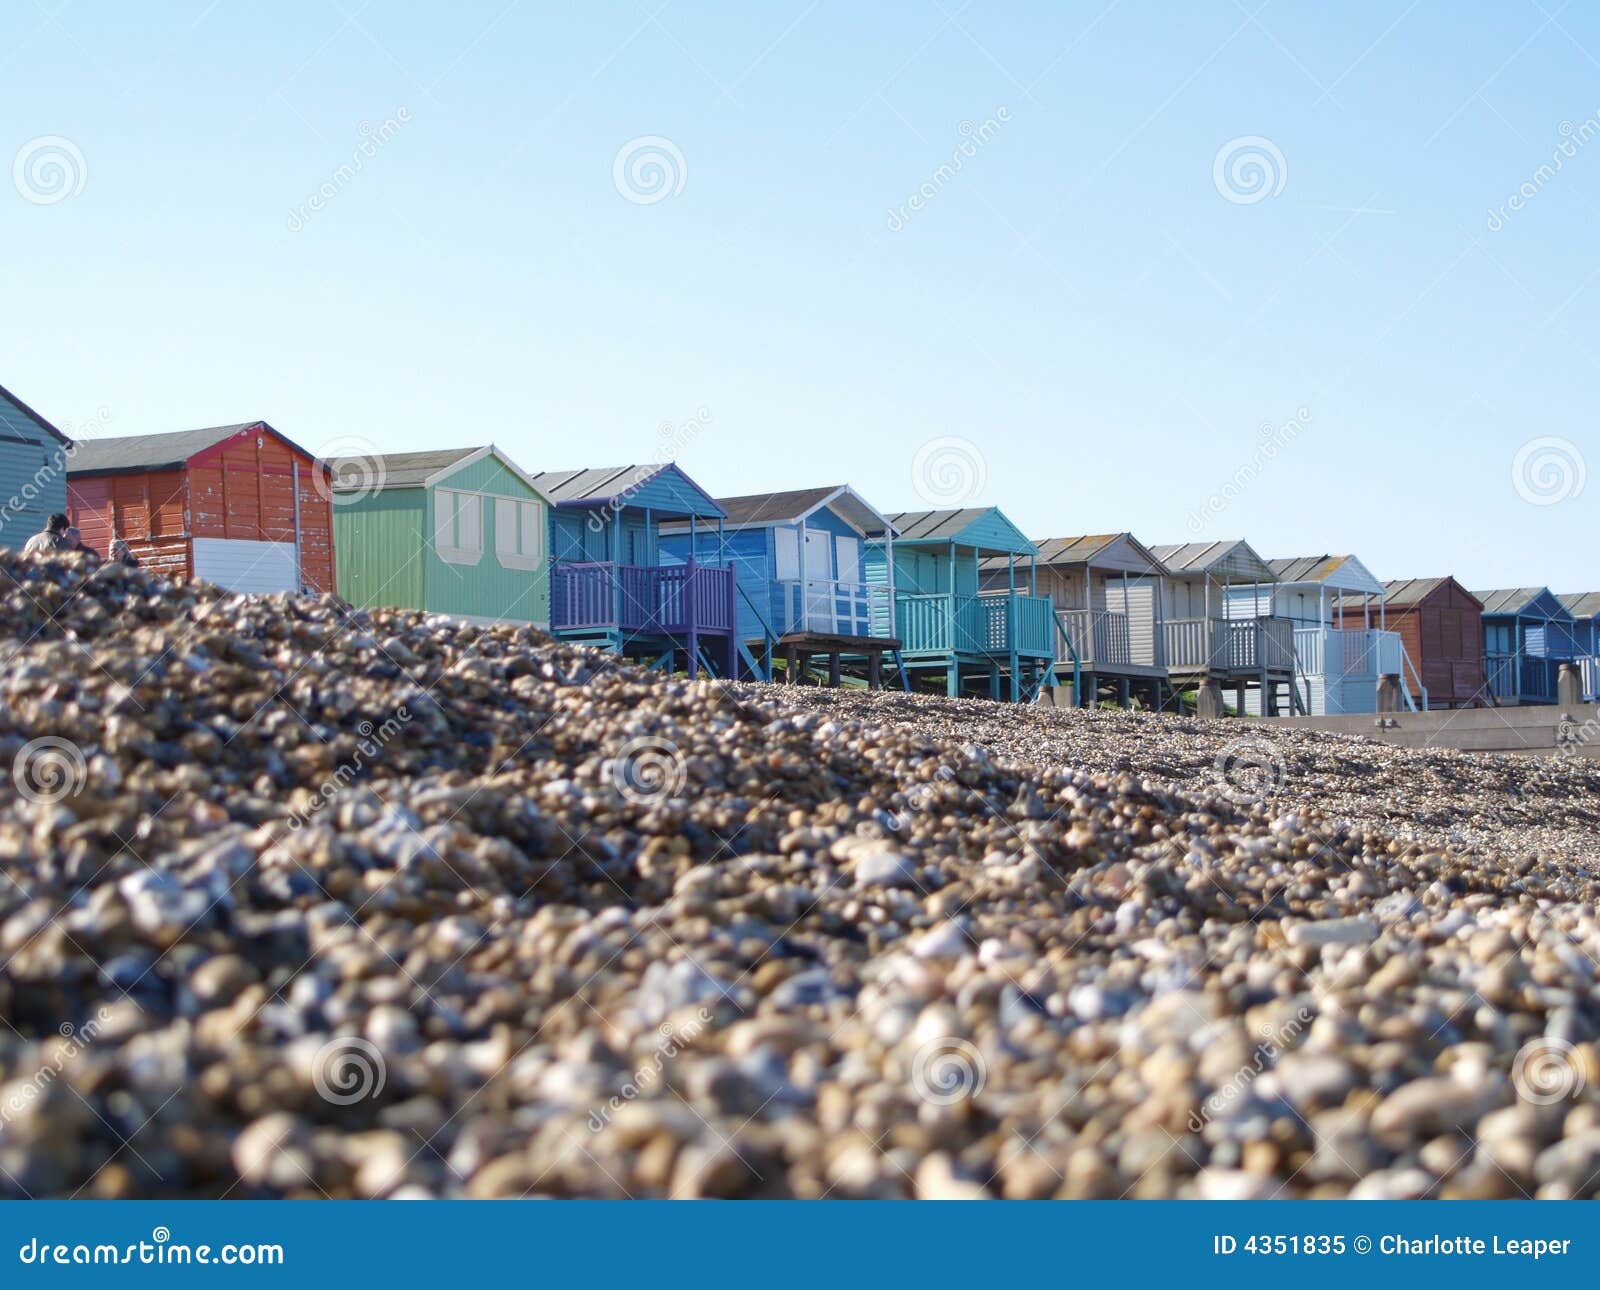 beach huts on pebble beach